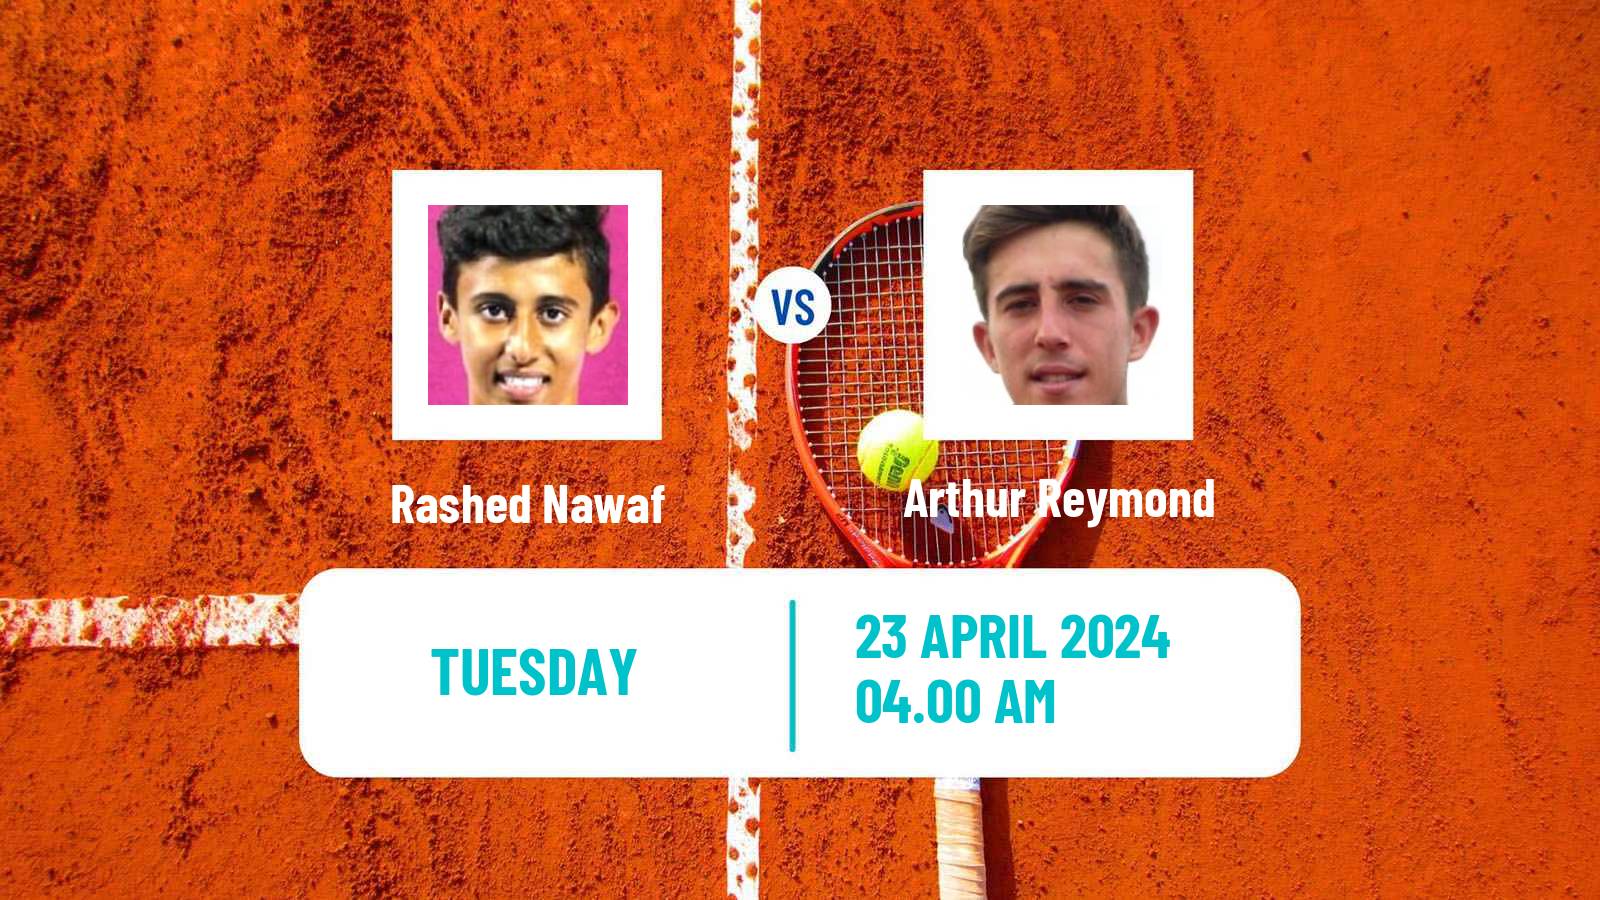 Tennis ITF M15 Antalya 12 Men Rashed Nawaf - Arthur Reymond